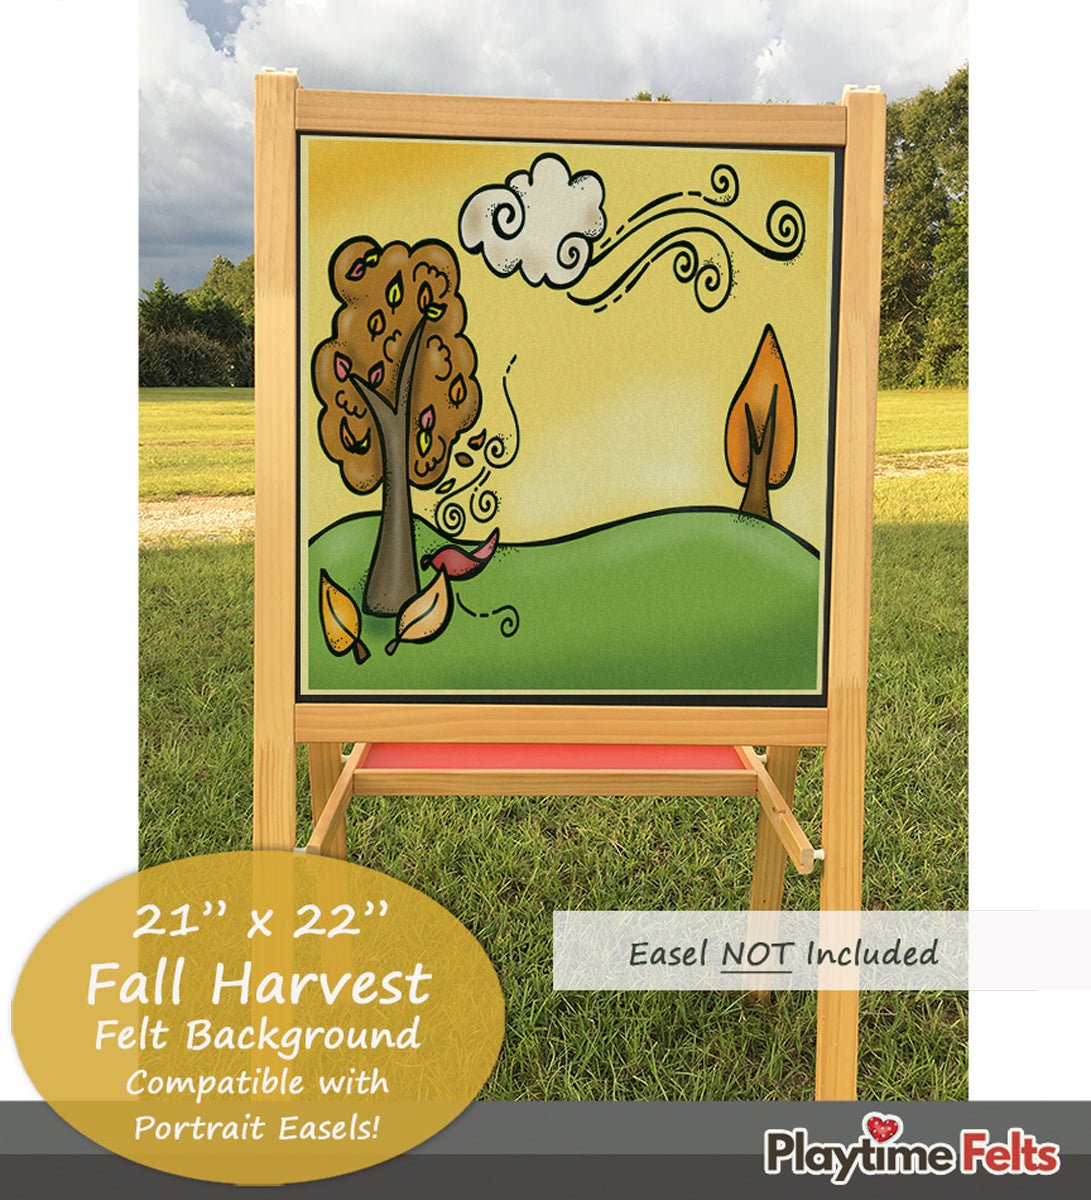 21" x 22" Fall Harvest Felt Scene for Board and Easel Flannel Board Teaching - Felt Board Stories for Preschool Classroom Playtime Felts